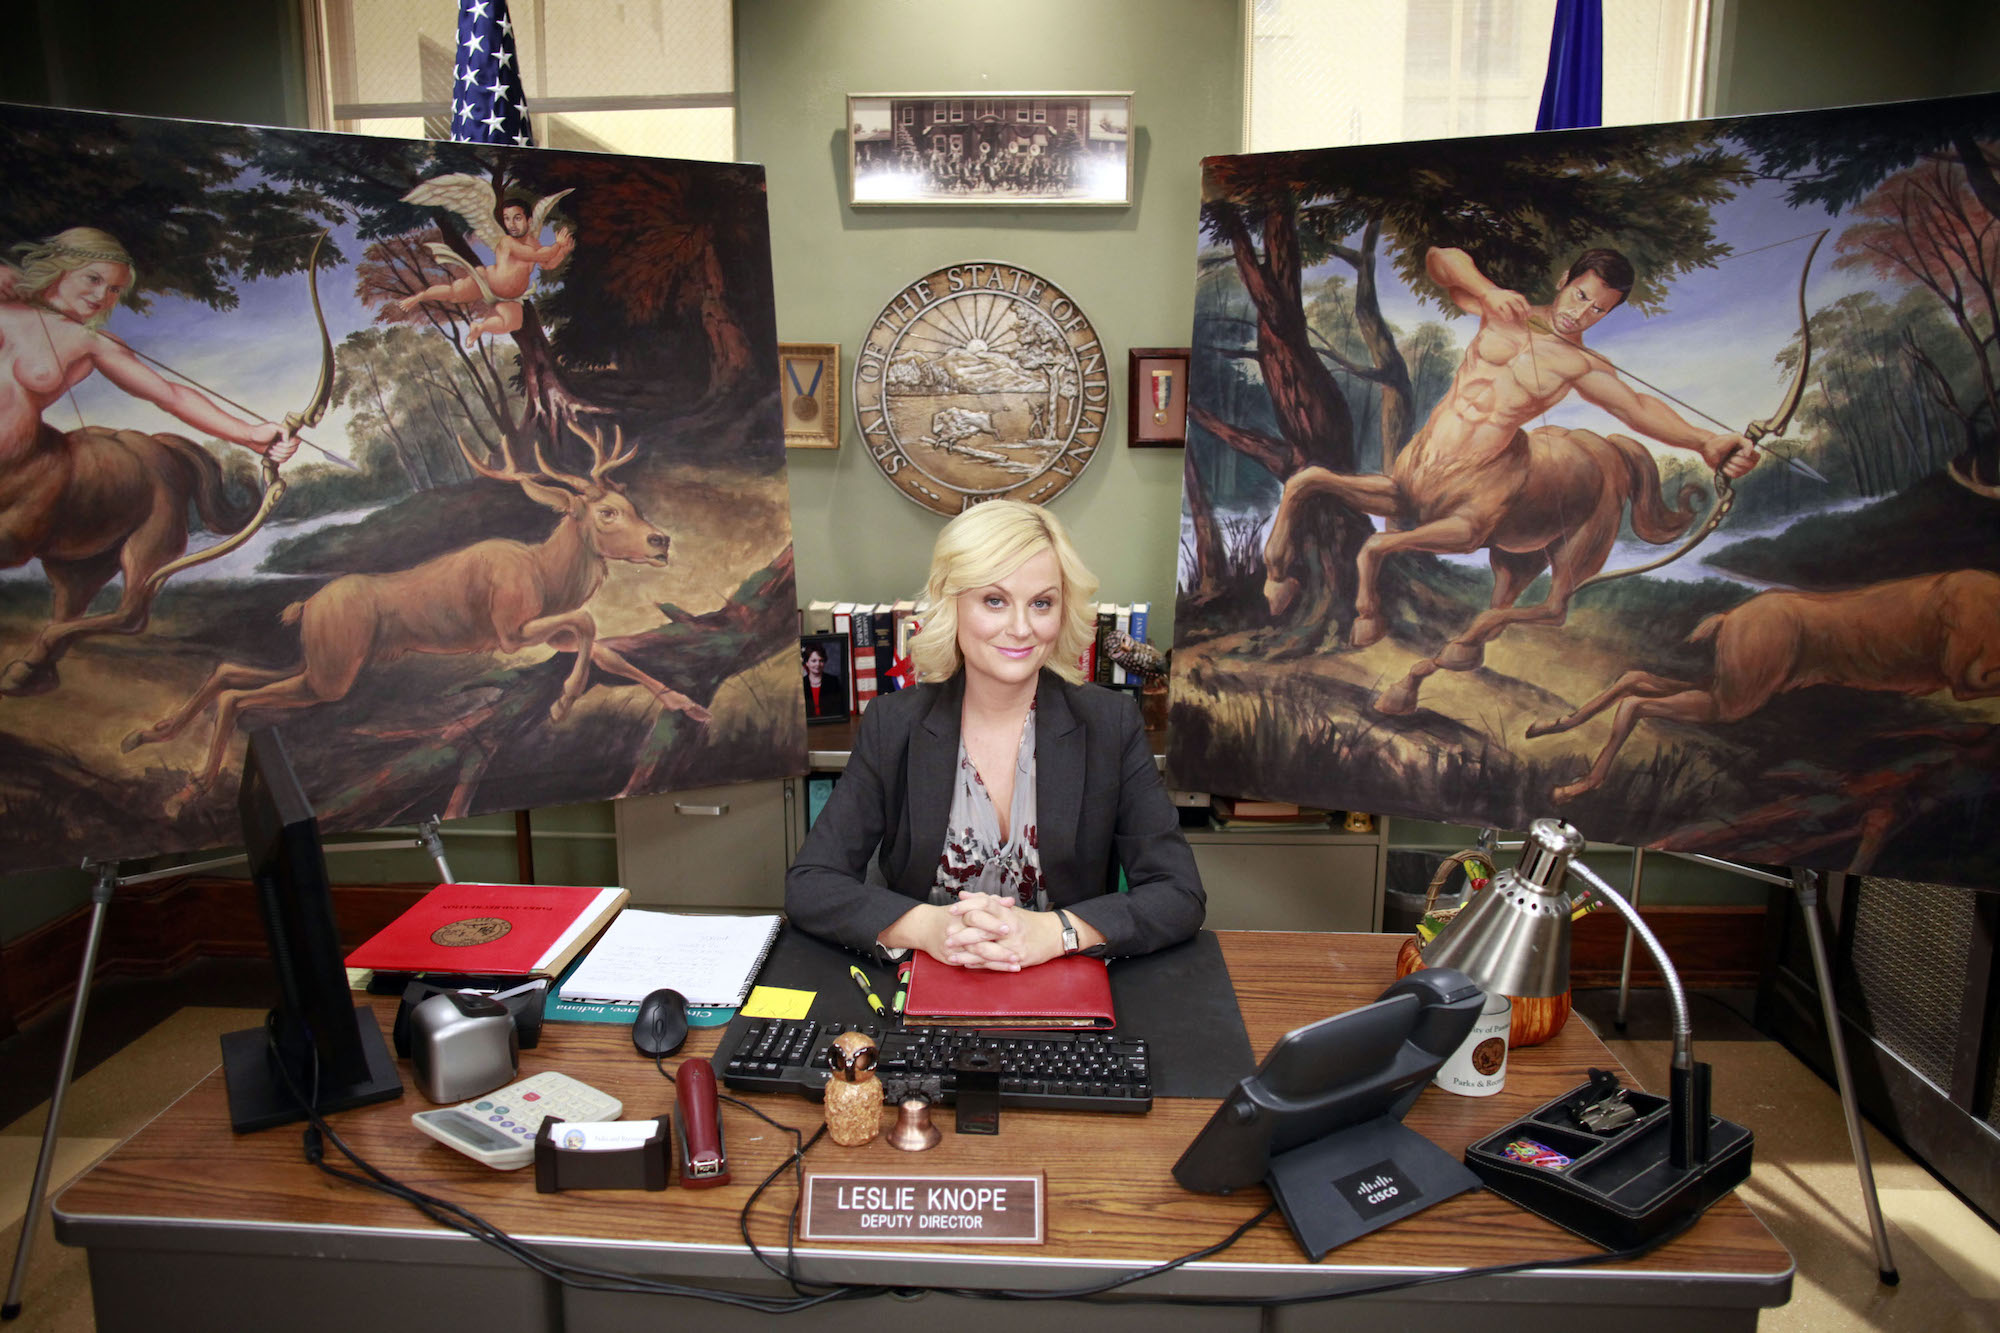 Parks and Recreation: Leslie Knope sits at her desk